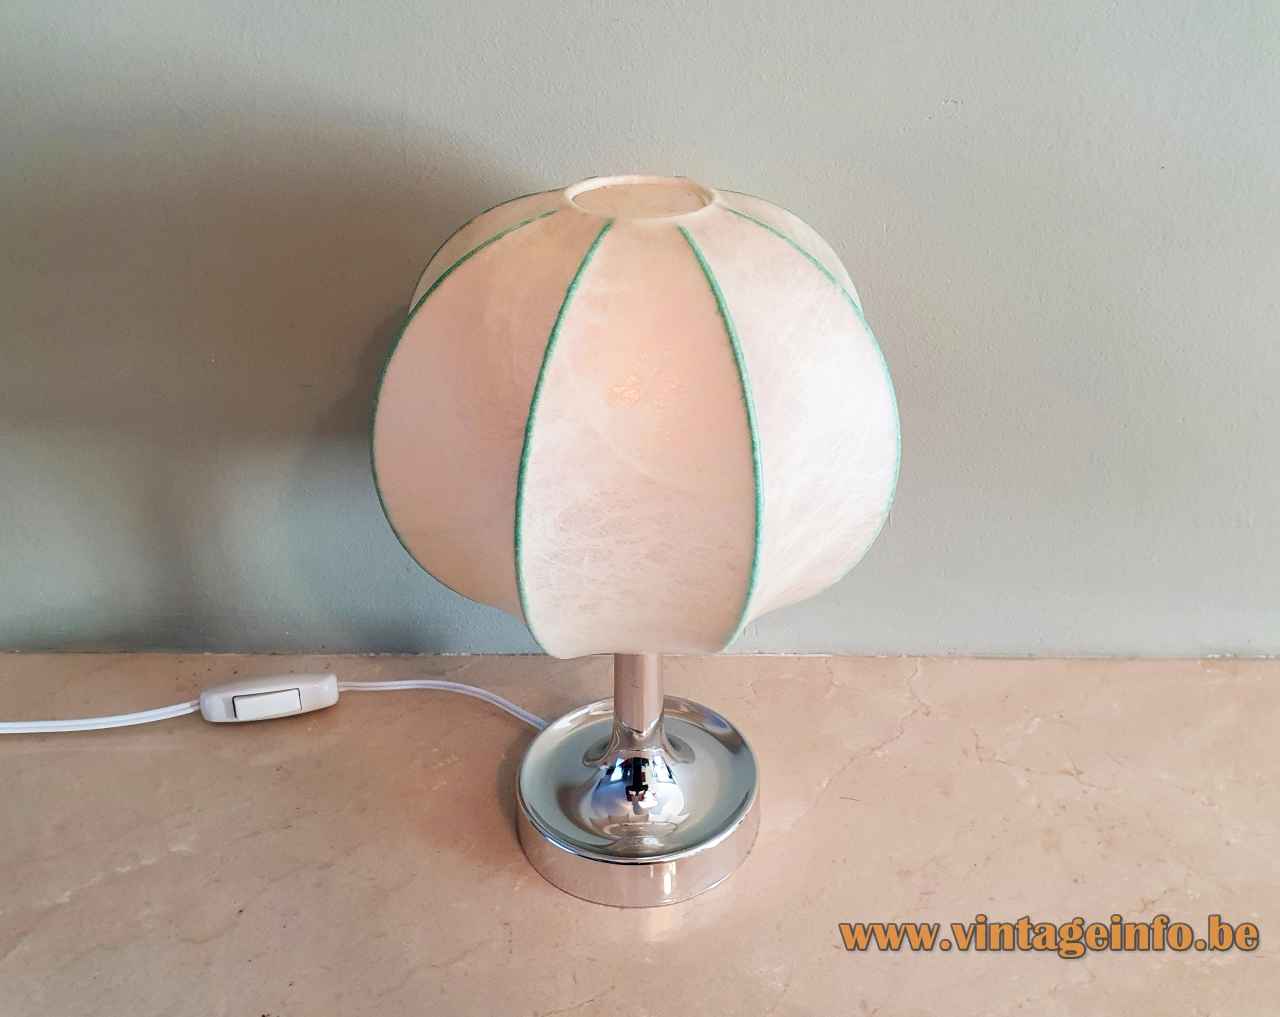 Goldkant Leuchten Salbo table lamp round chrome base cocoon plastic globe lampshade 1960s 1970s Germany